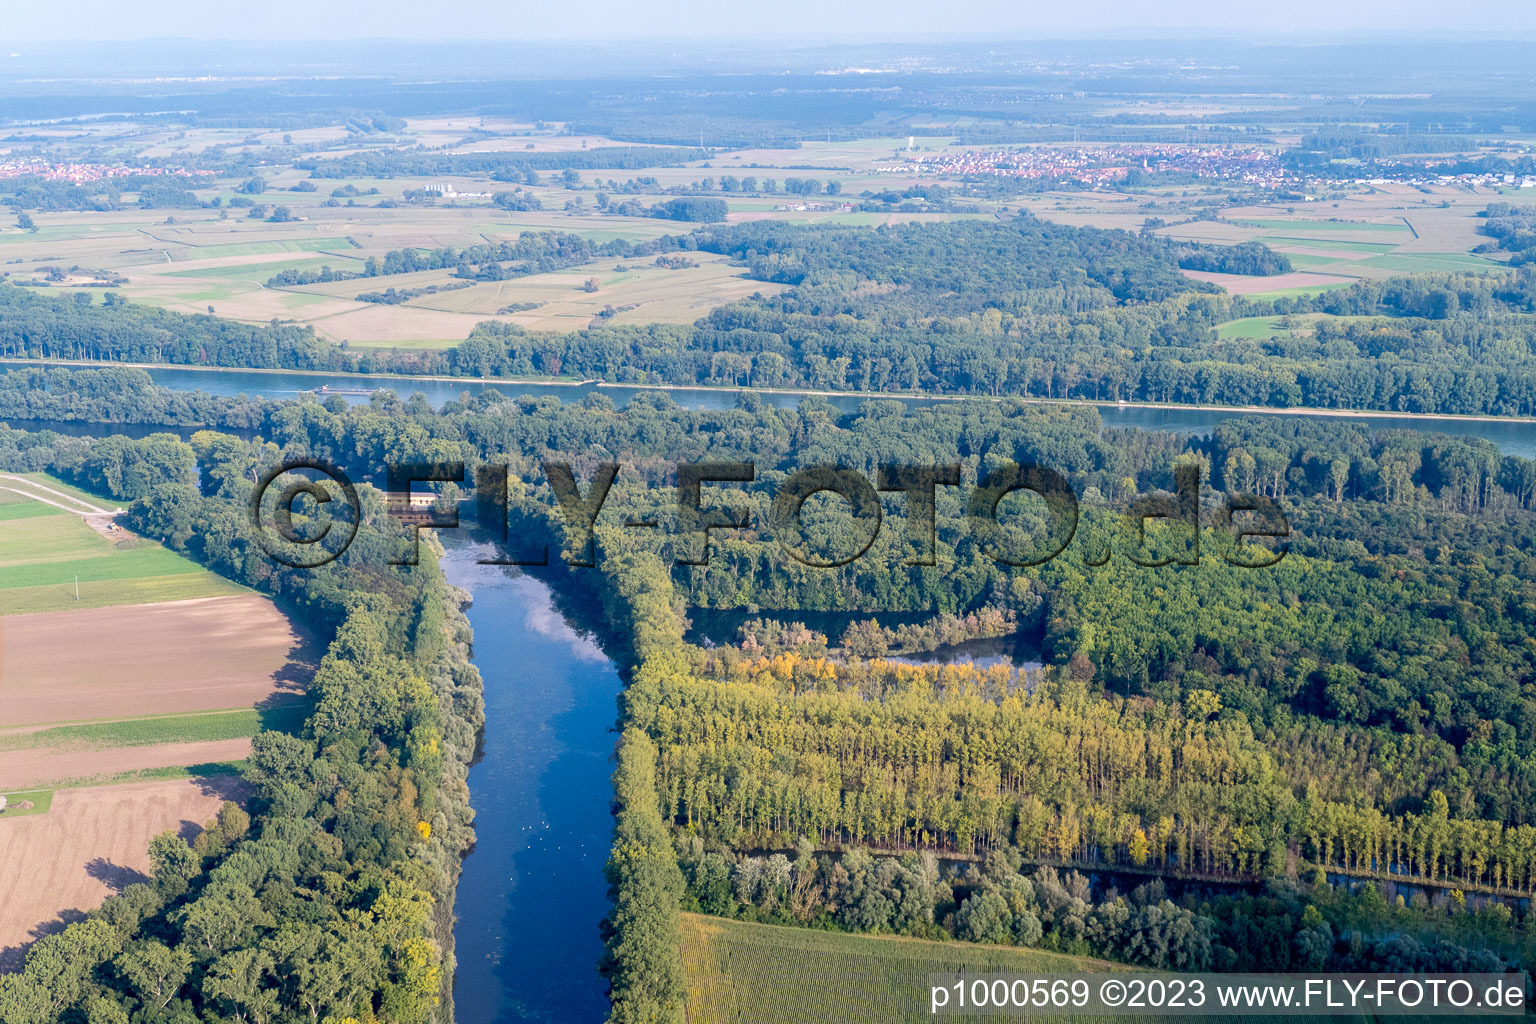 District Sondernheim in Germersheim in the state Rhineland-Palatinate, Germany from above